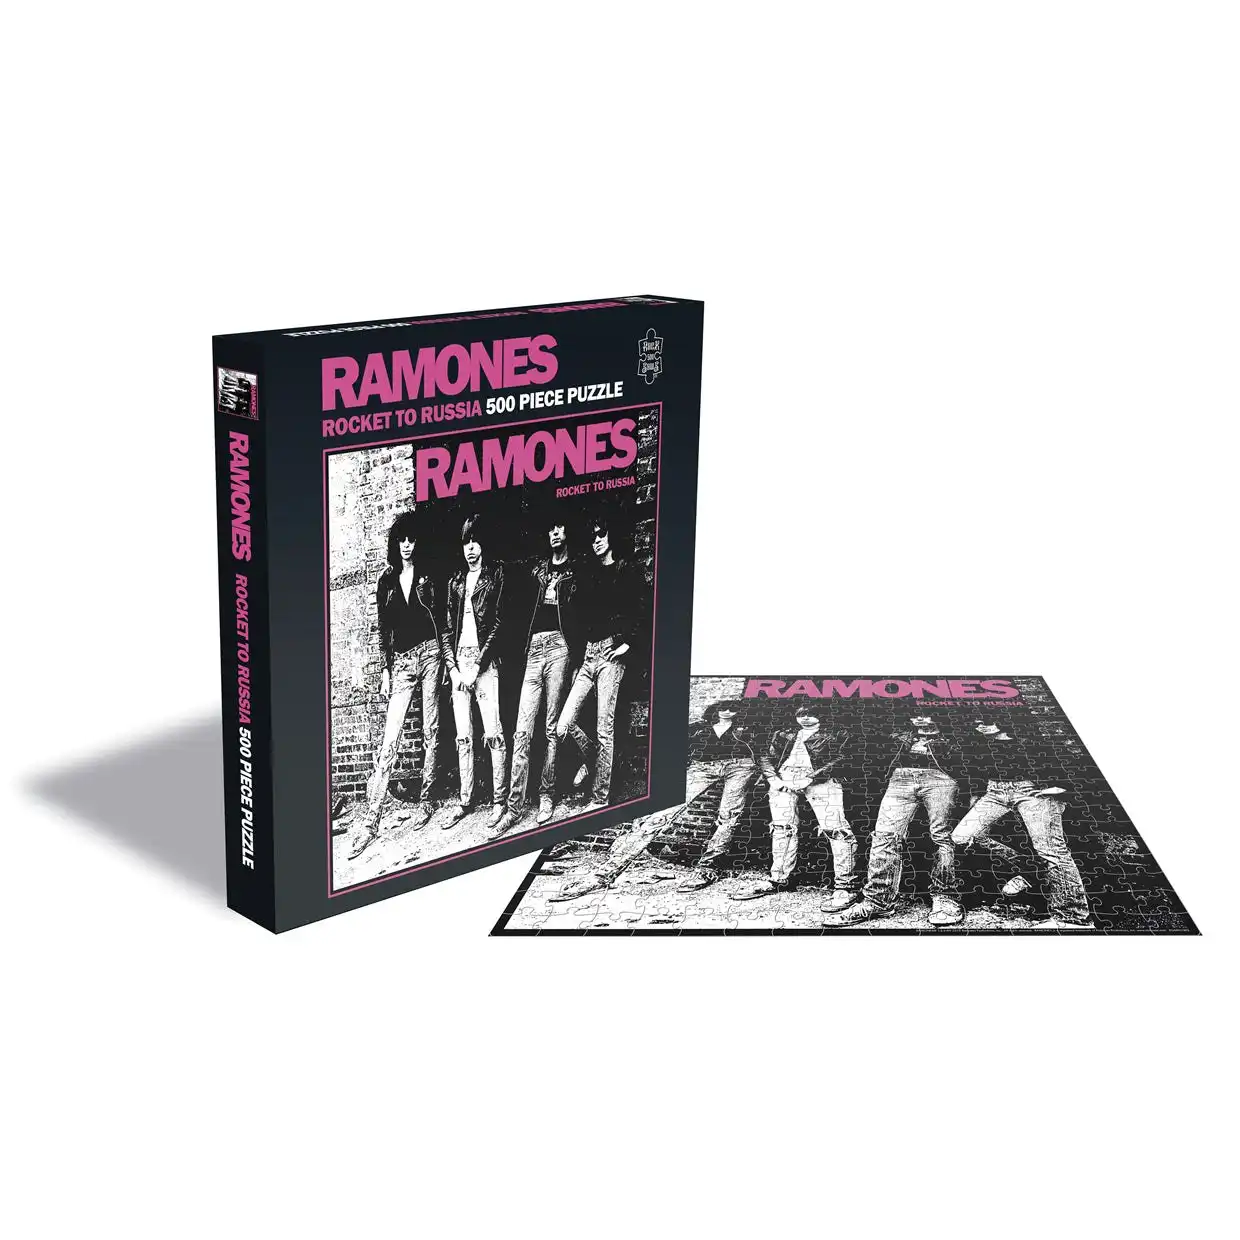 The Ramones - Rocket To Russia Album Cover 500pc Puzzle